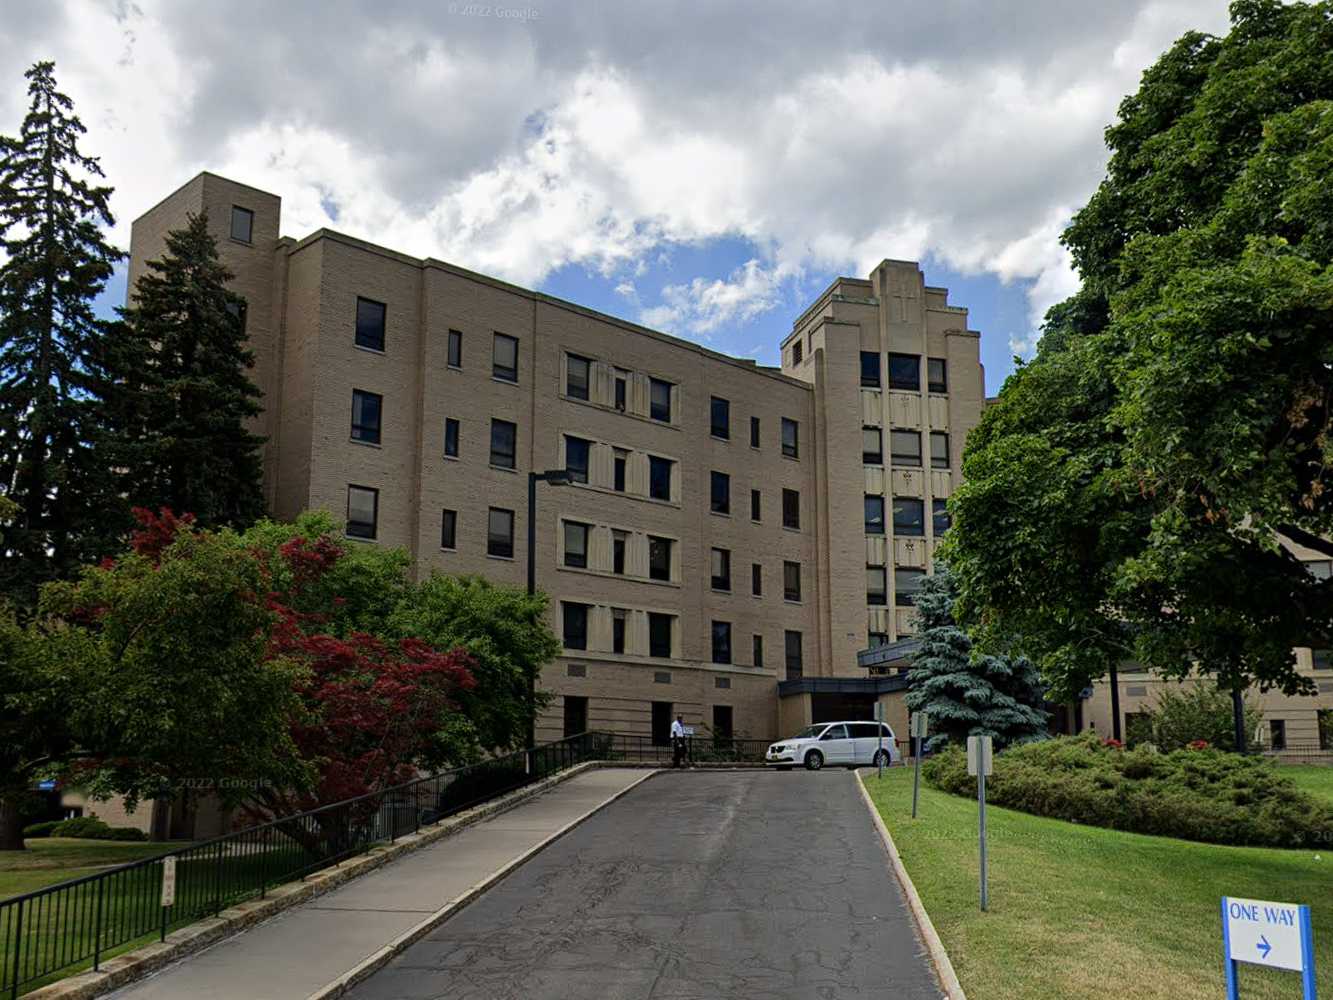 Unity Hospital of Rochester